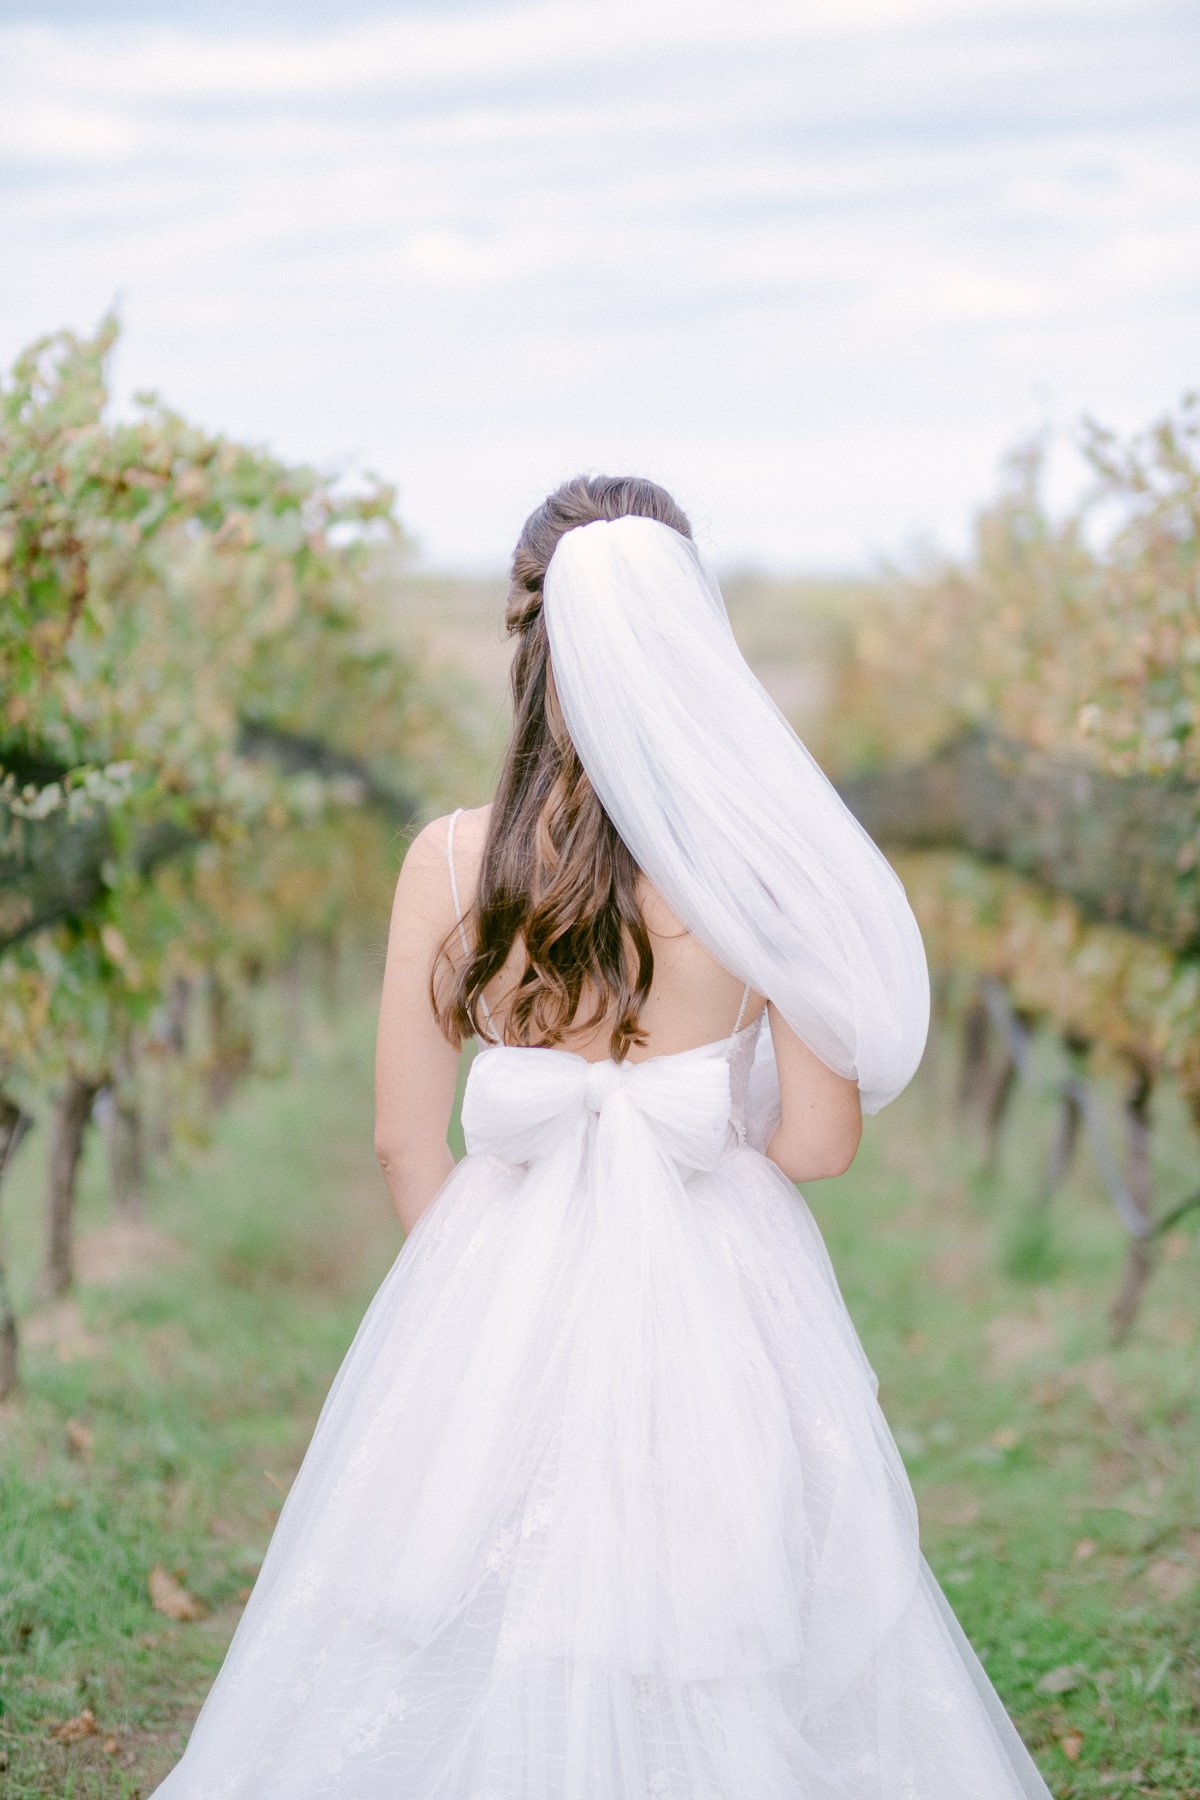 Ravine-Vineyard-Editorial-Wedding-Vineyard-Bride-Photo-By-Paolo-Manrique-Photography-0088.JPG